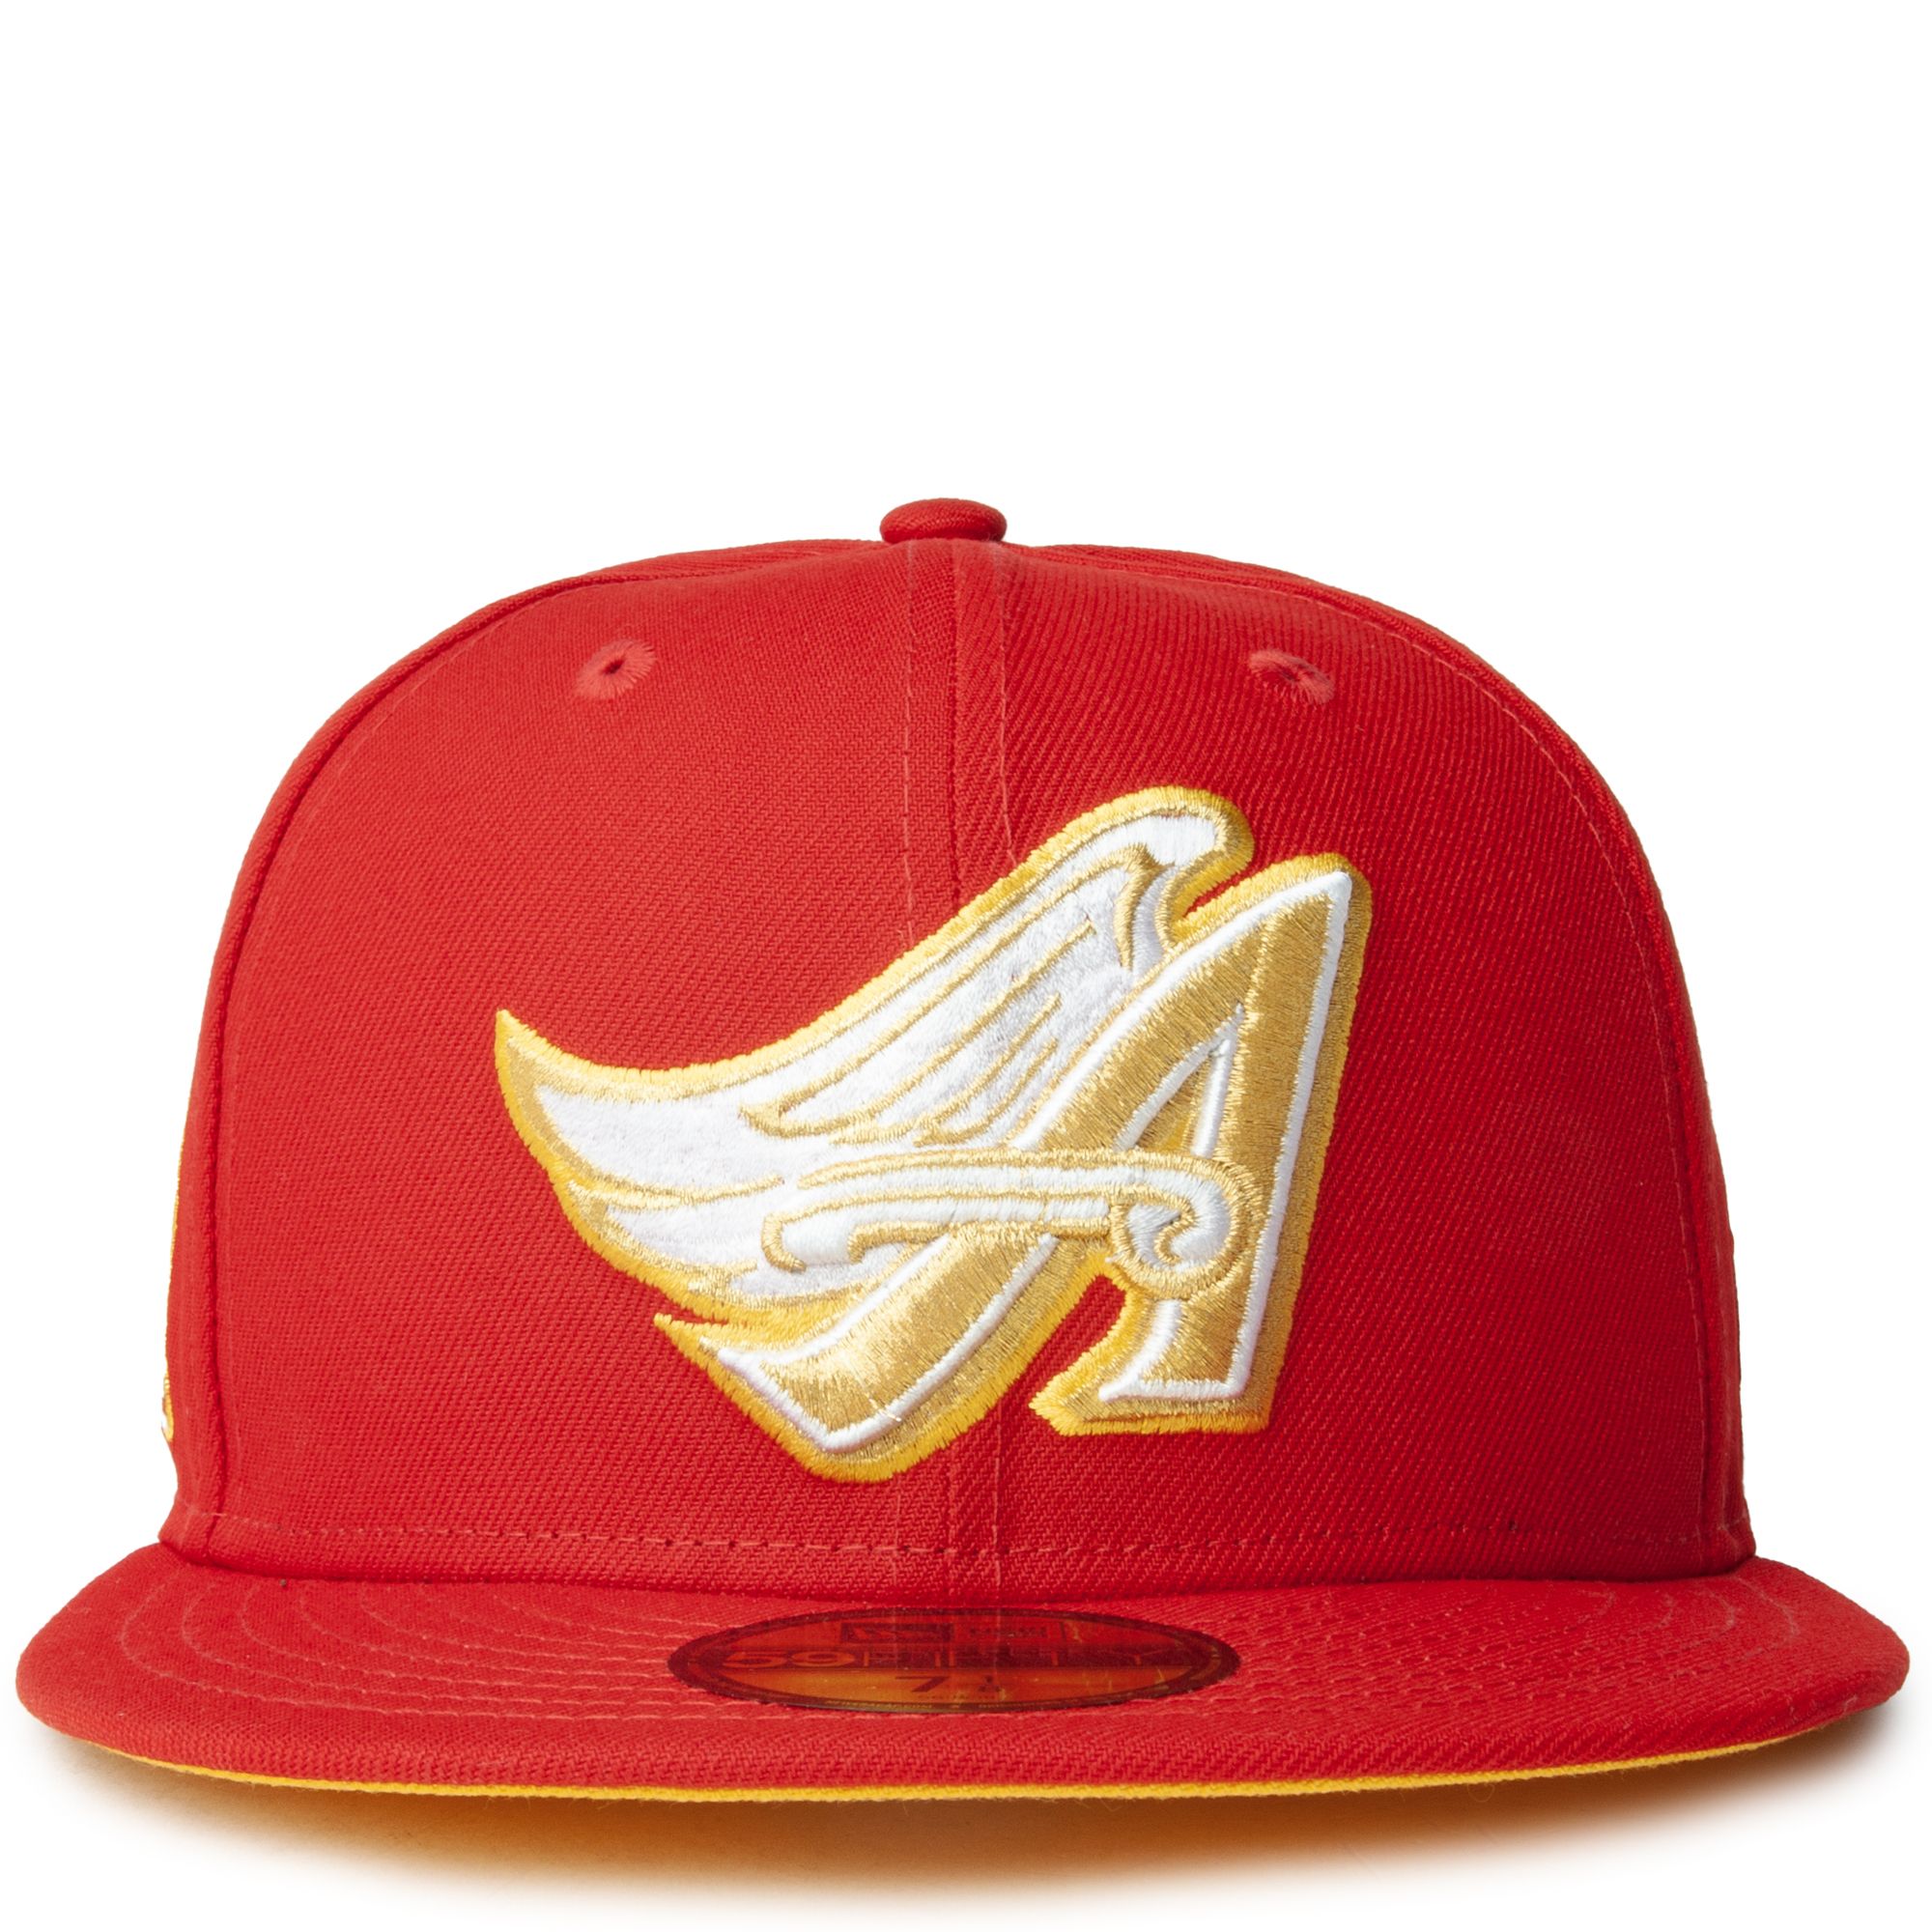 Atlanta Braves Gold Hats, Braves Gold Jerseys, Braves Gold Collection